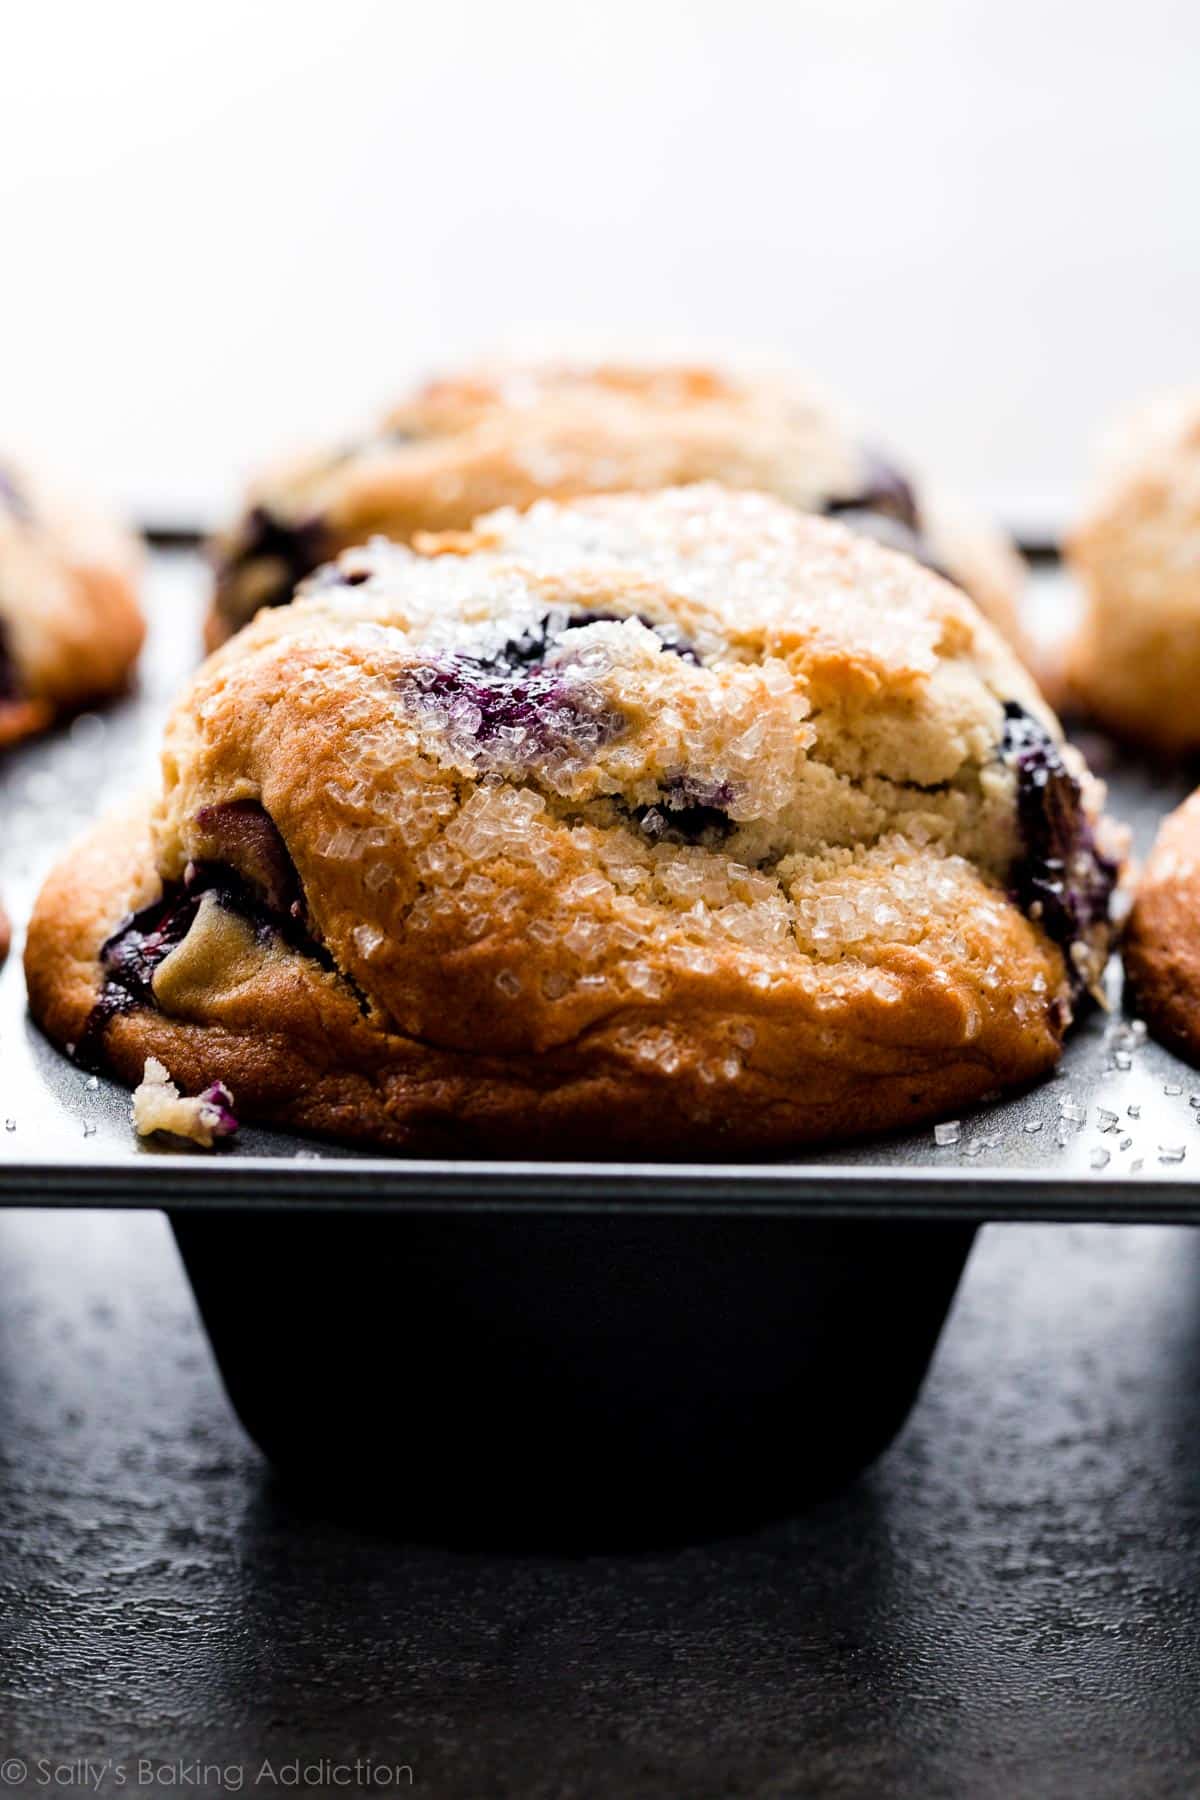 https://sallysbakingaddiction.com/wp-content/uploads/2013/01/jumbo-blueberry-muffins.jpg